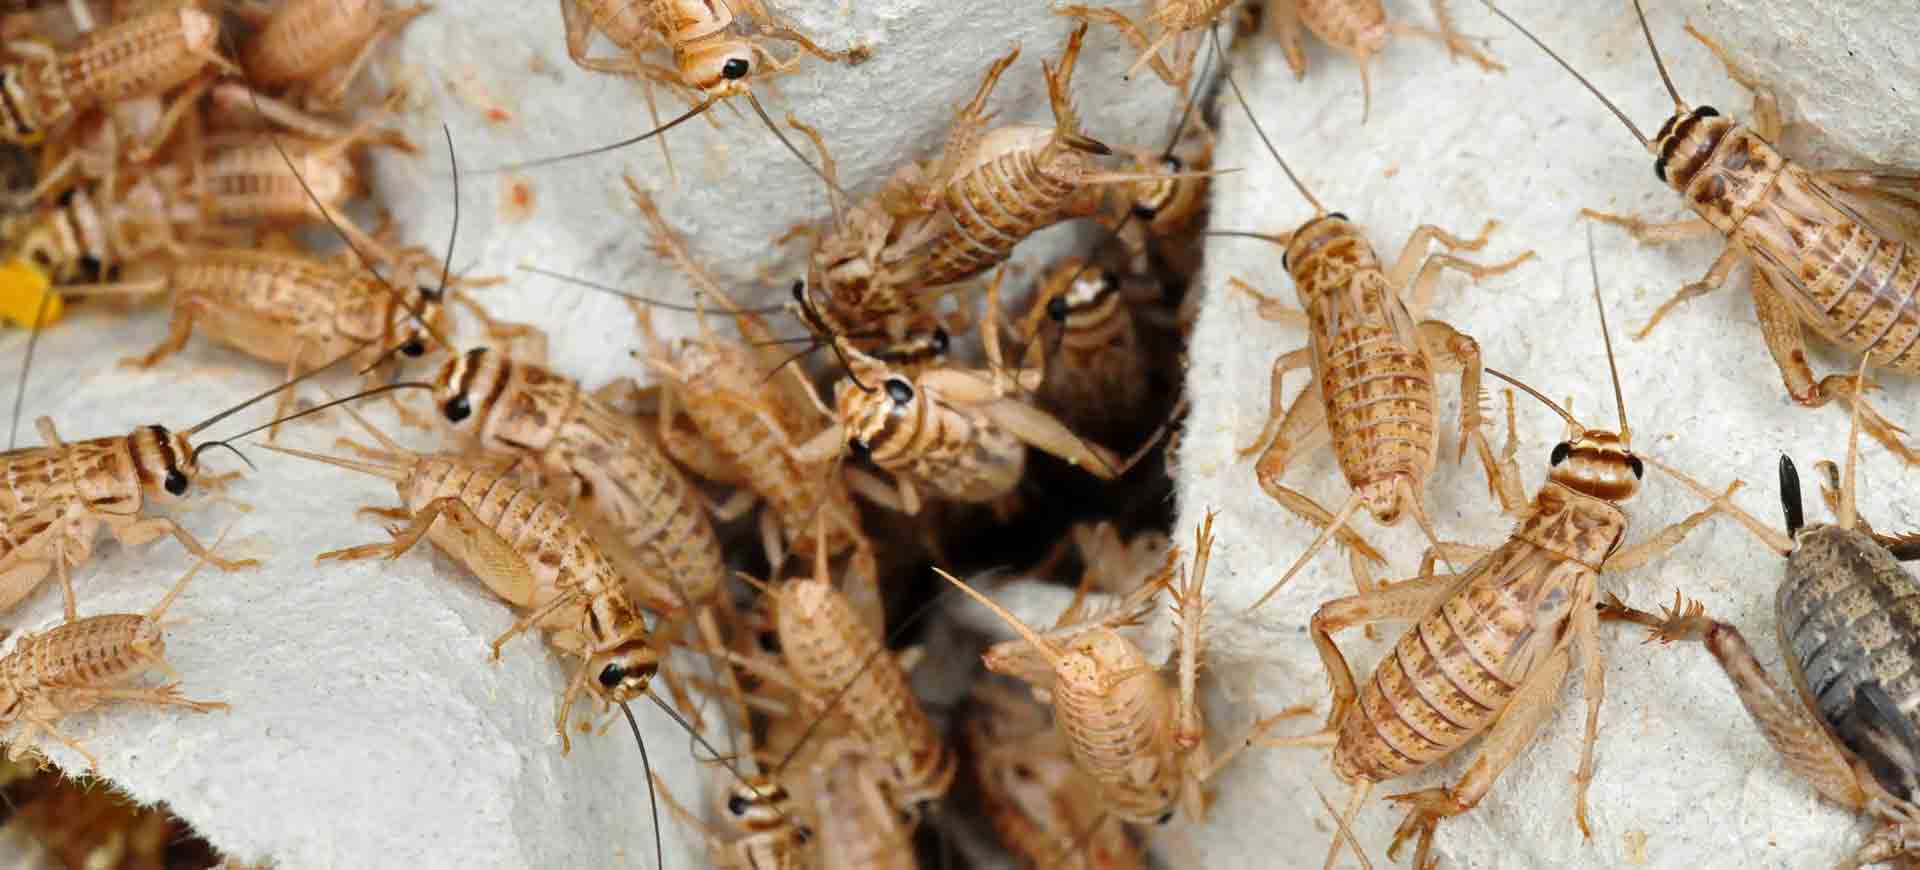 cricket pest control mission beach